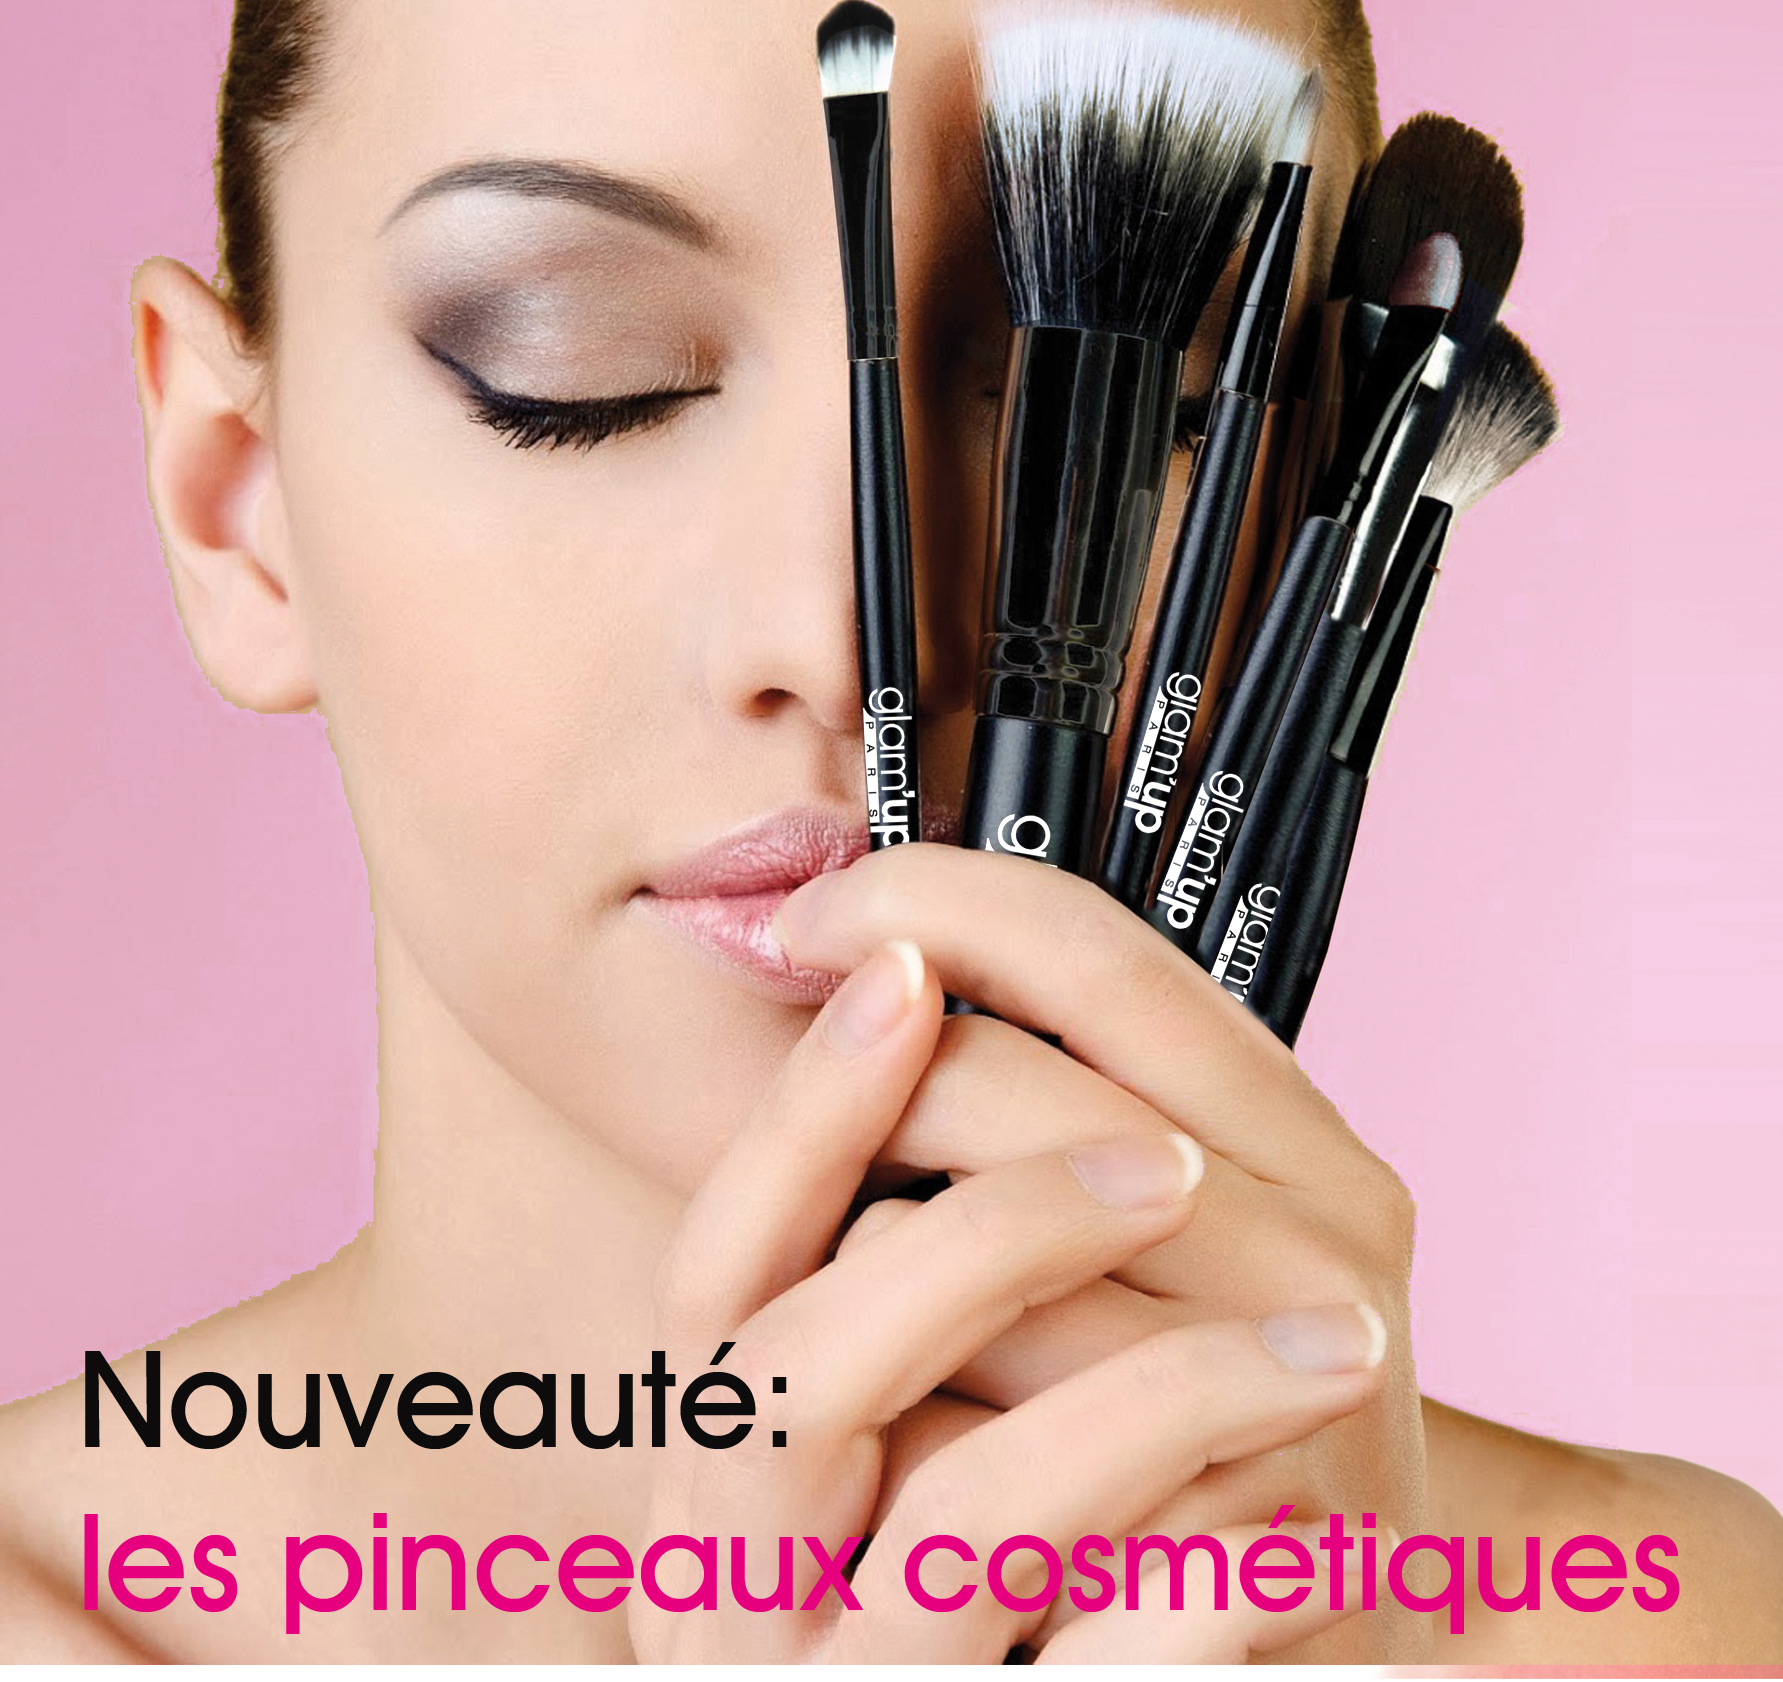 You are currently viewing Les nouveaux pinceaux cosmétiques Glam’Up